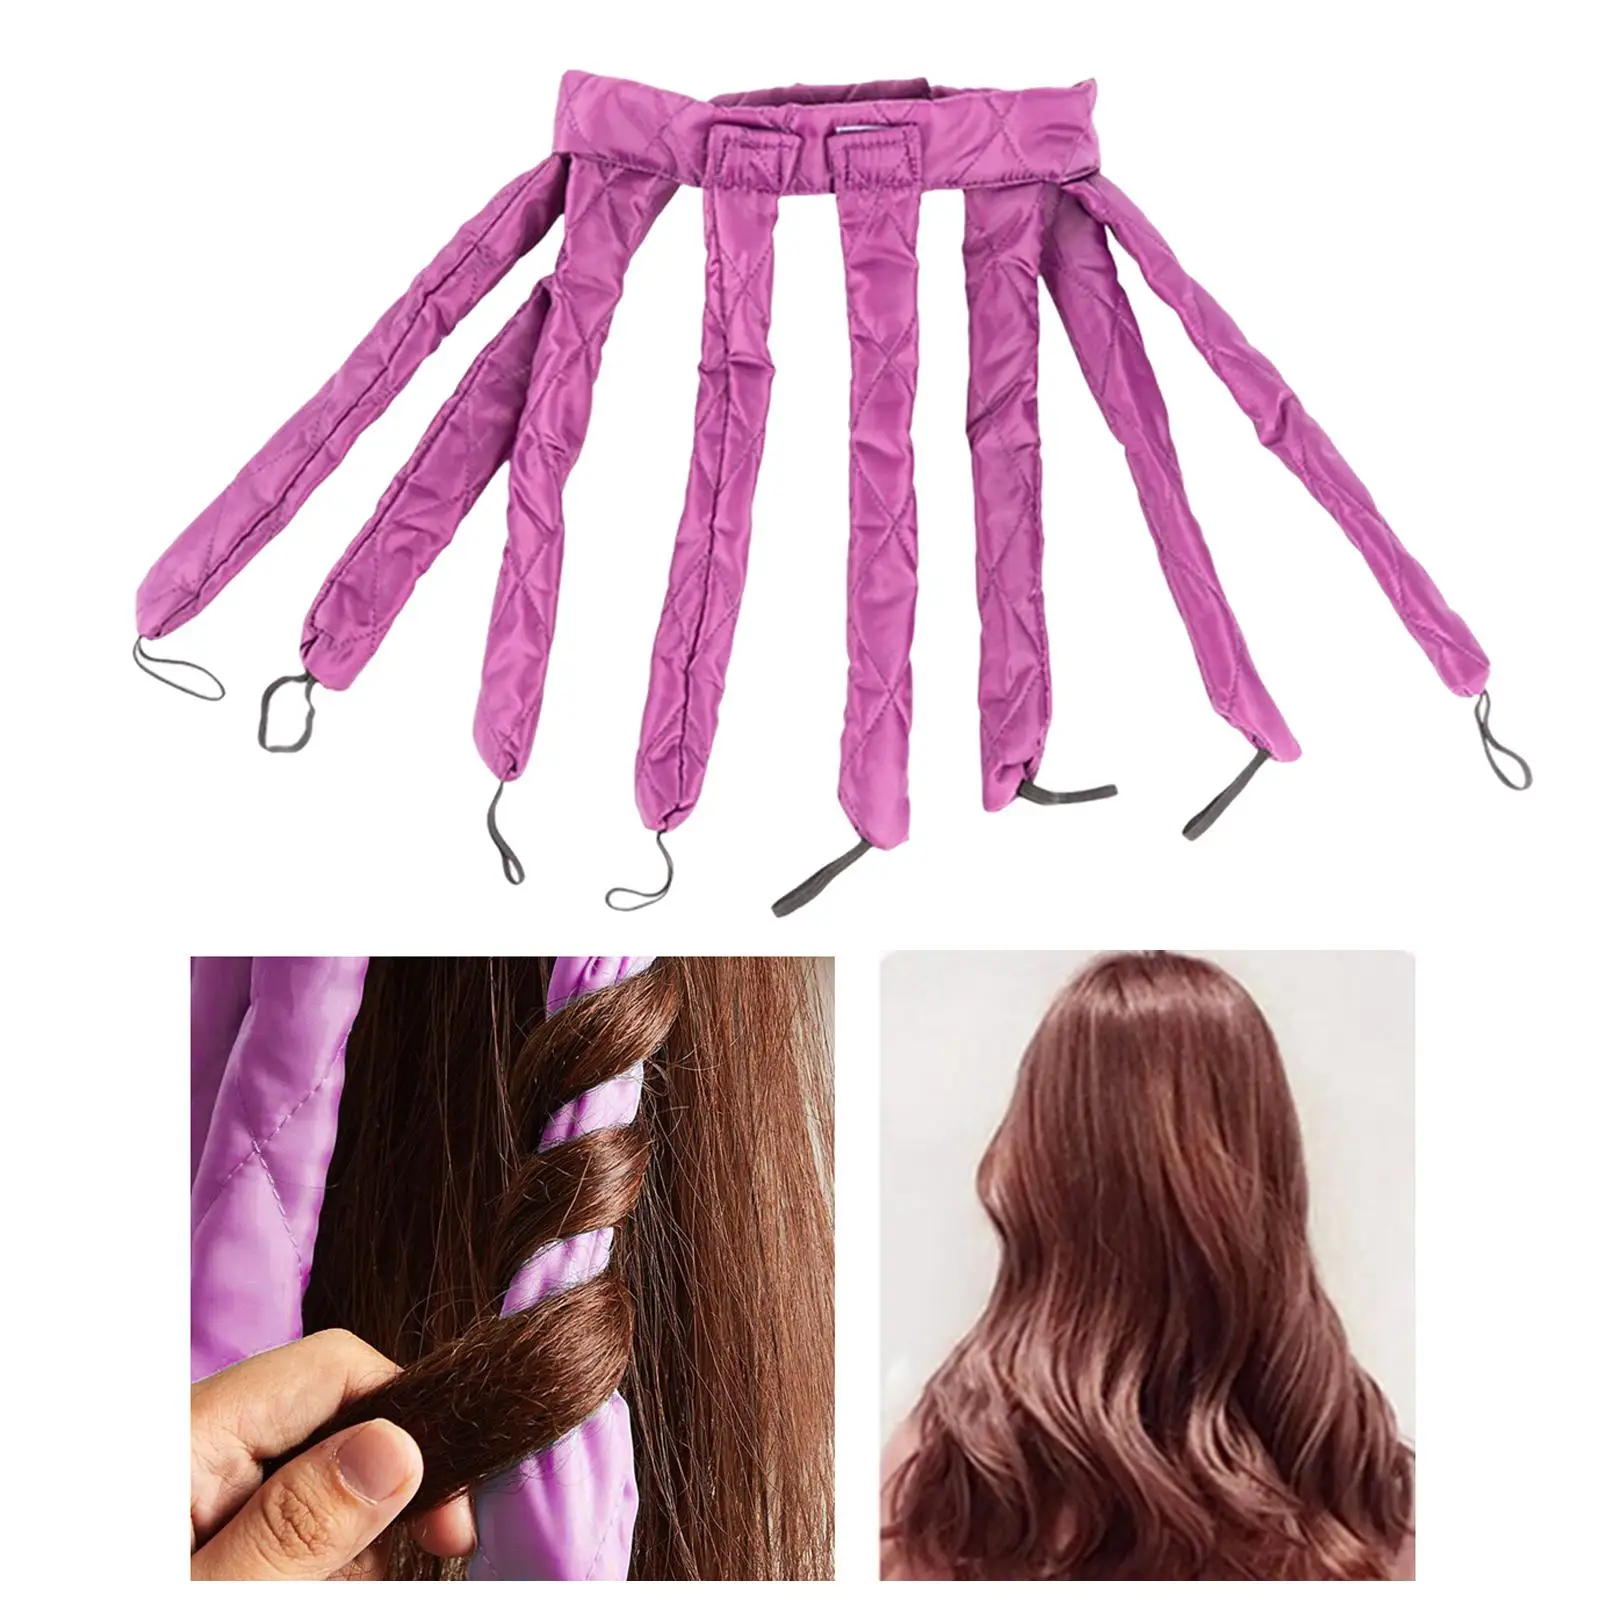 Heatless Hair Curler Hair Styling Tool Sleep Overnight Curls No Heat Curling Rod Headband Wave Hair Curler Natural Curls